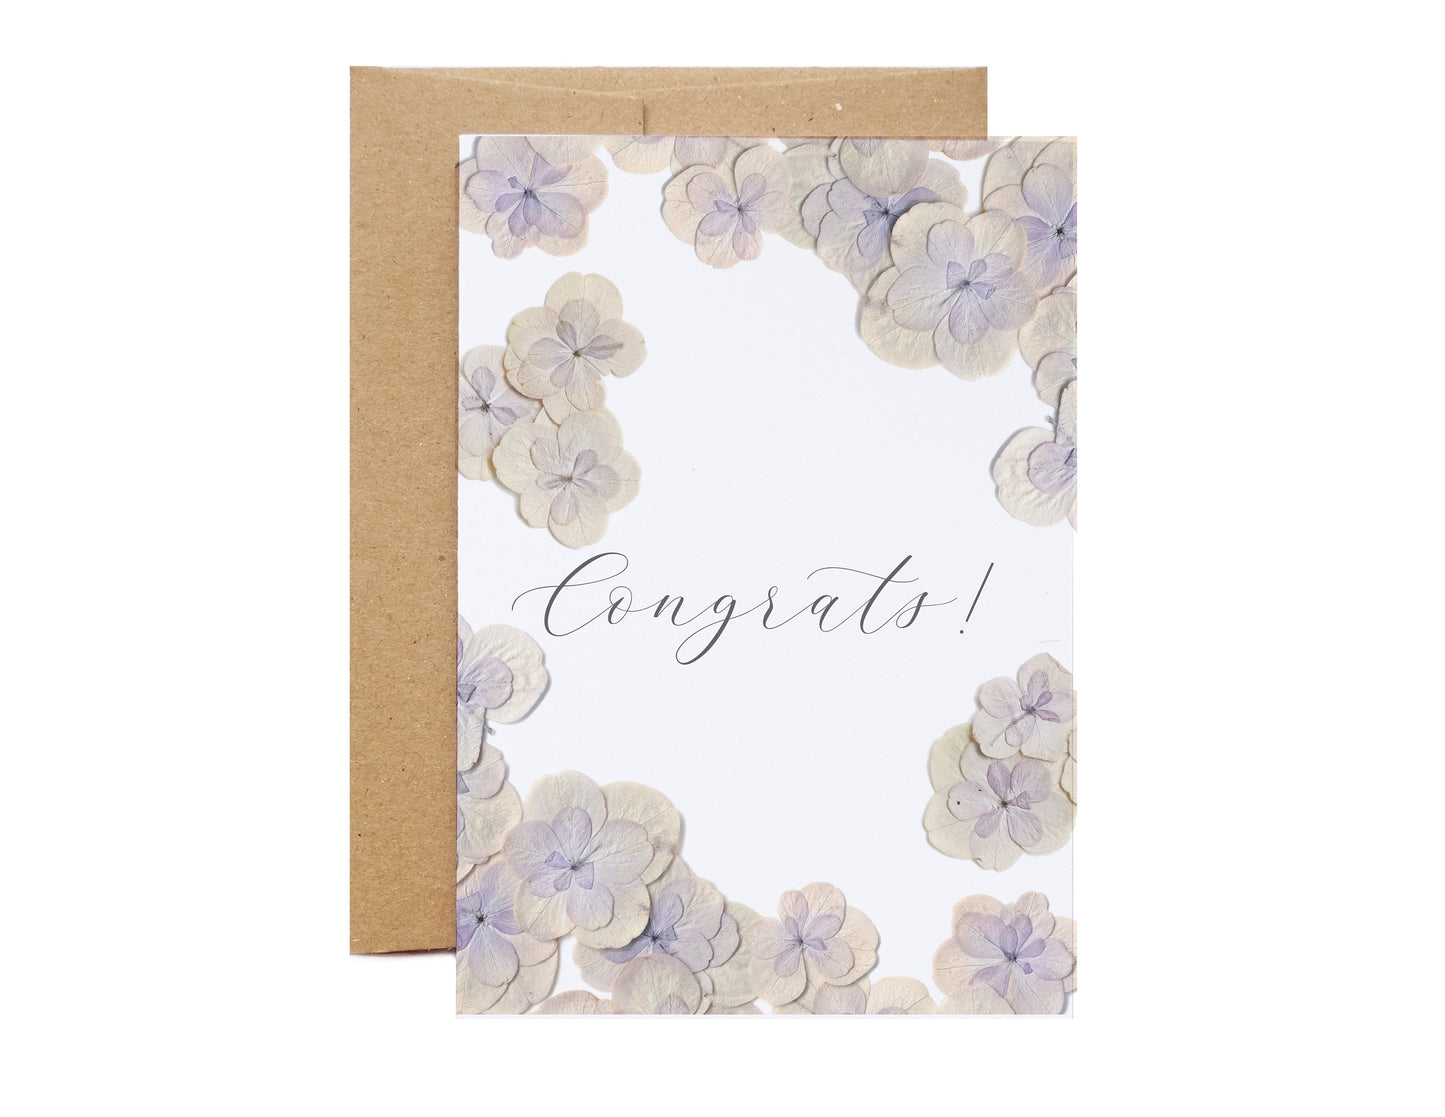 Congrats, Purple Hydrangea, Large Card